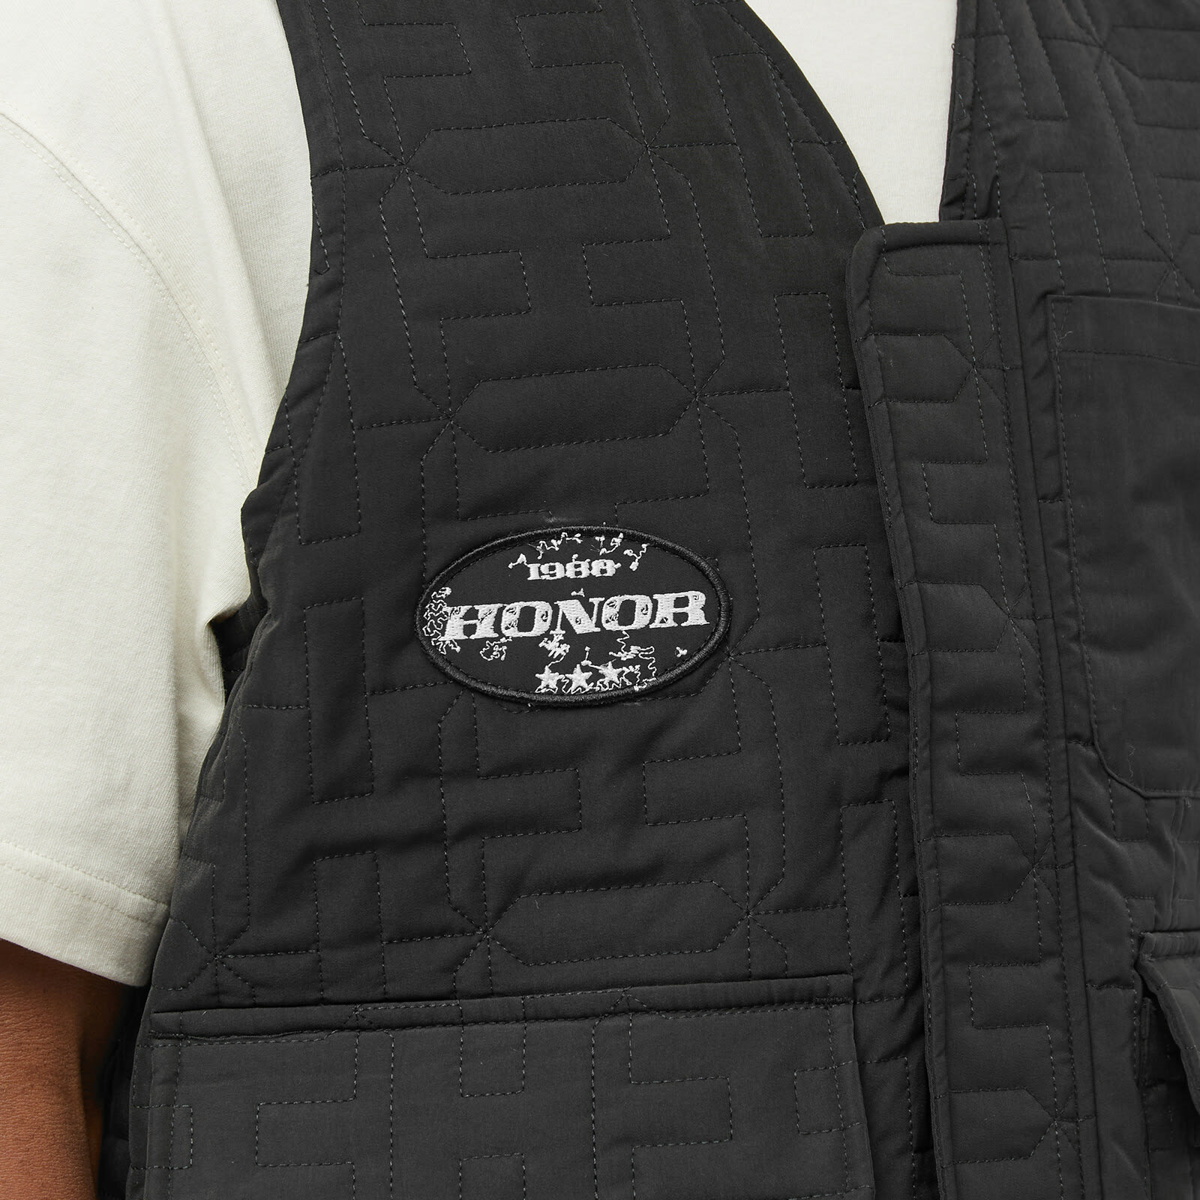 Quilted nylon trucker vest w/ pockets - Honor The Gift - Men